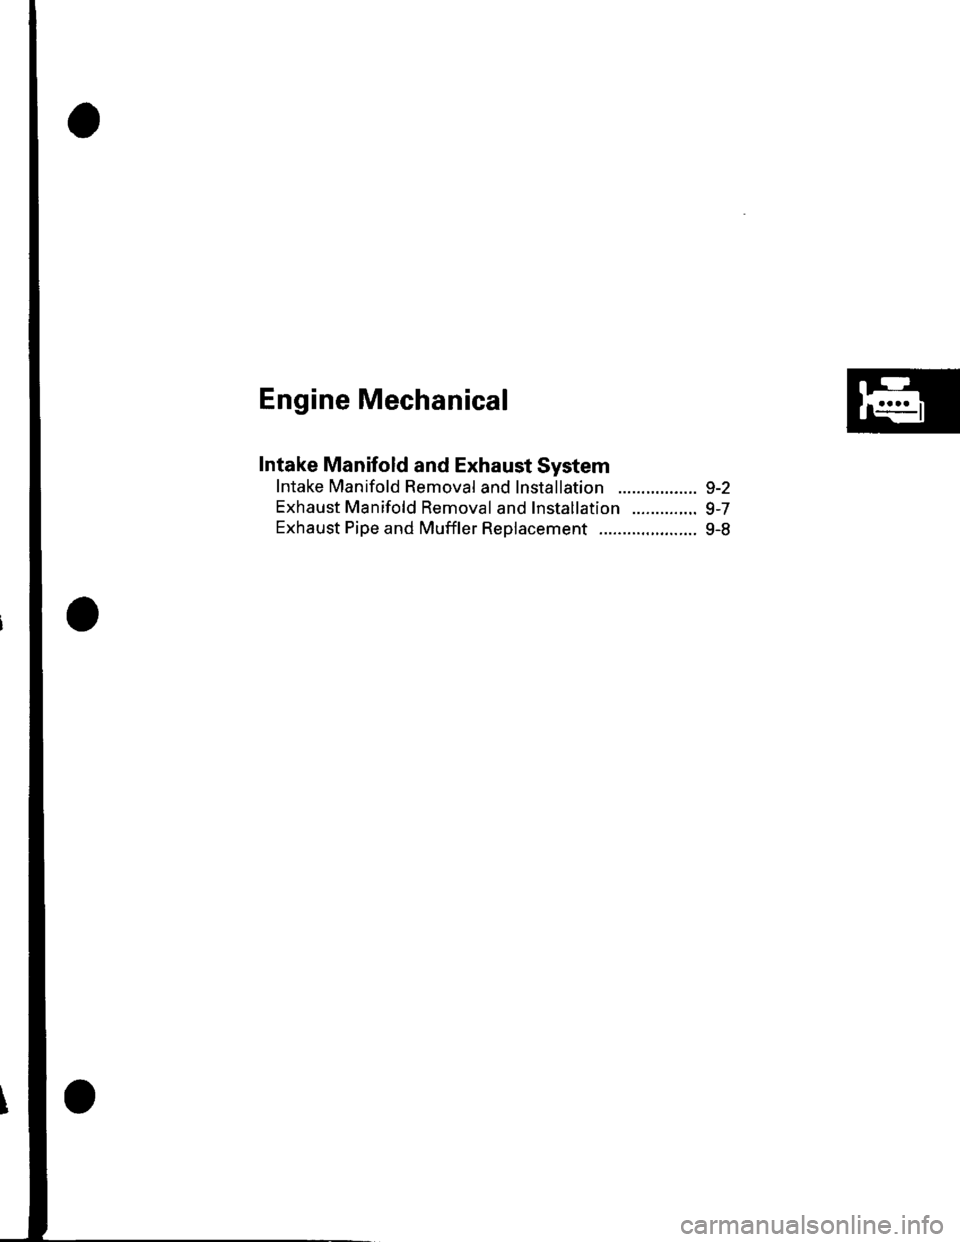 HONDA CIVIC 2003 7.G Workshop Manual Engine Mechanical
Intake Manifold and Exhaust System
lntake Manifold Removal and Installation ................. 9-2
Exhaust Manifold Removal and Installation .............. 9-7
Exhaust Pipe and Muffle